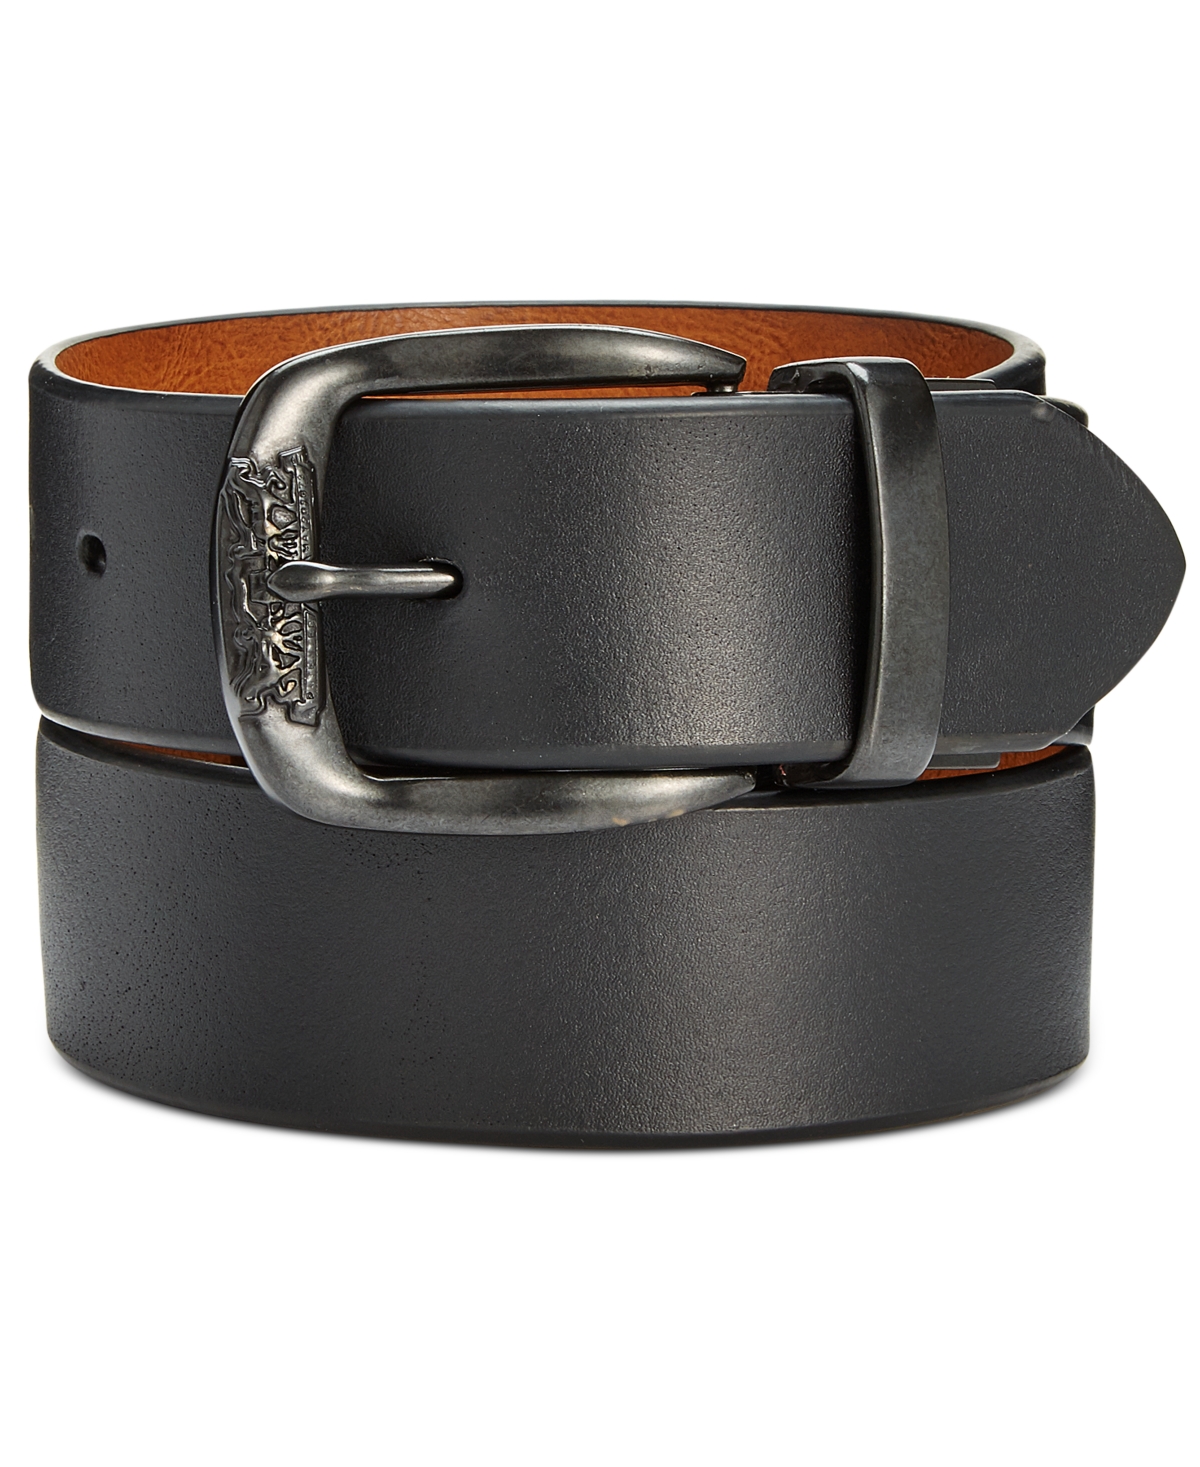 Men's Smooth Leather Reversible Belt - Black/tan